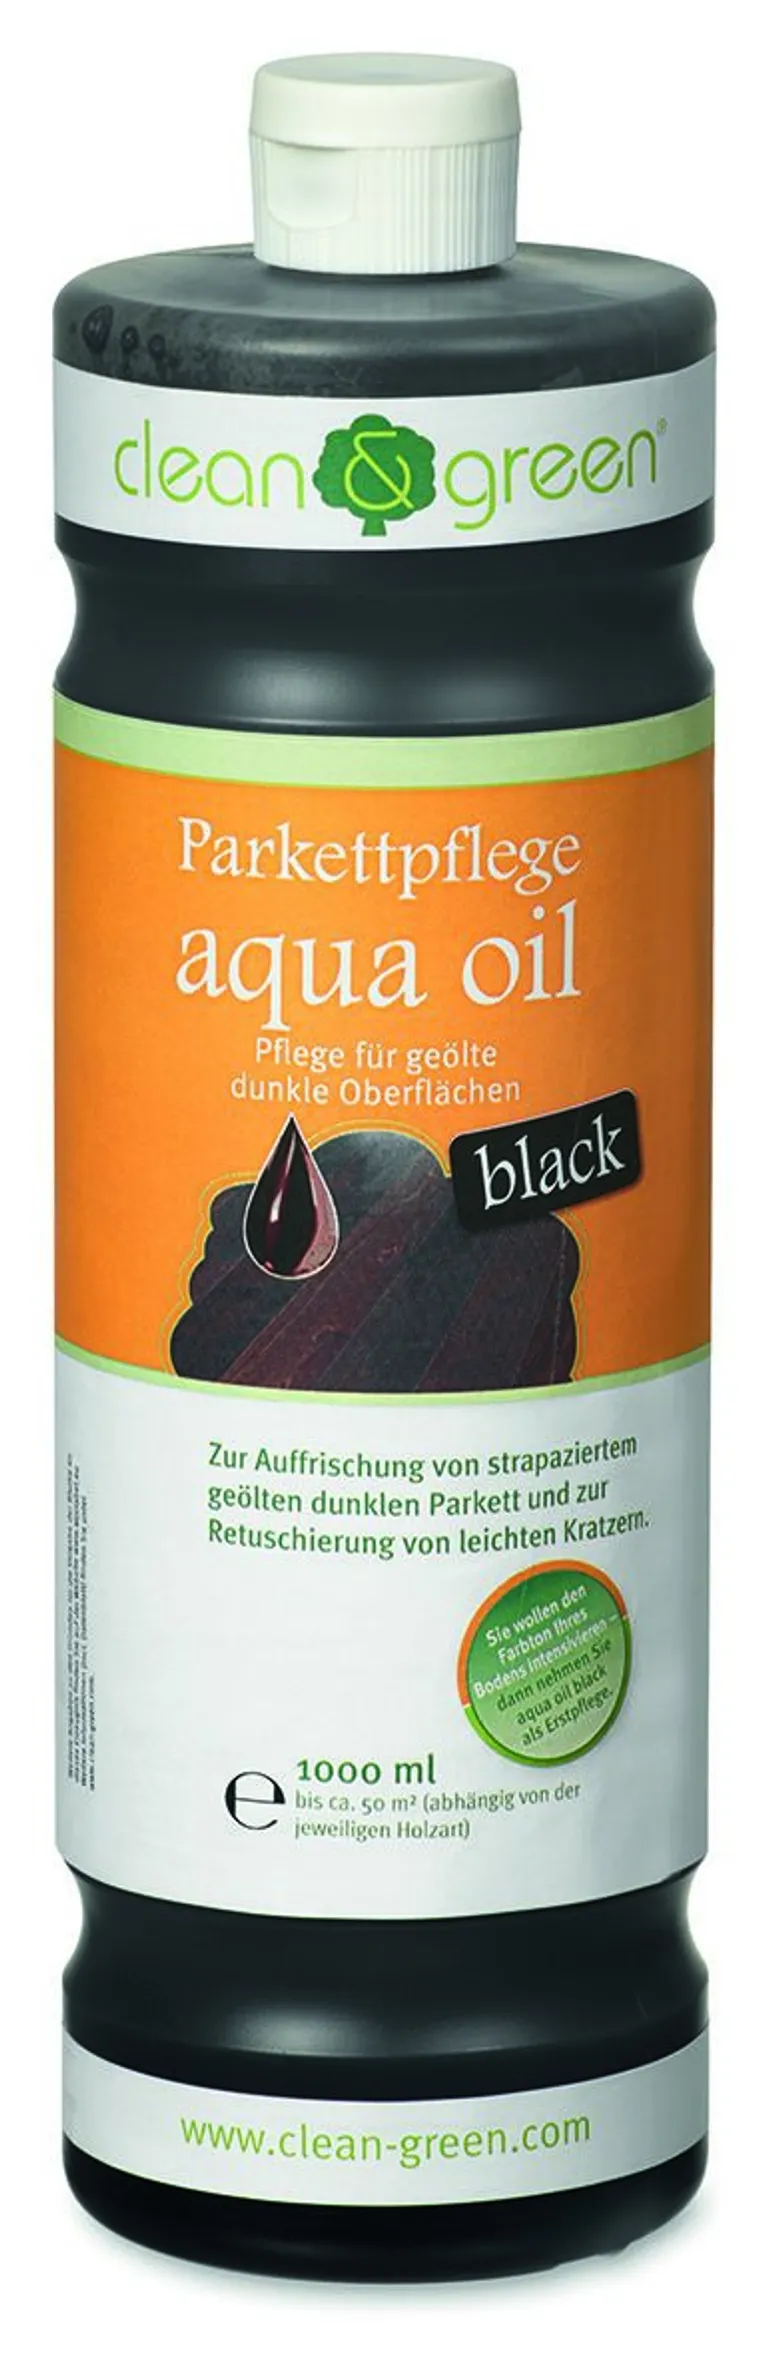 clean & green Parkettpflege aqua oil black 0